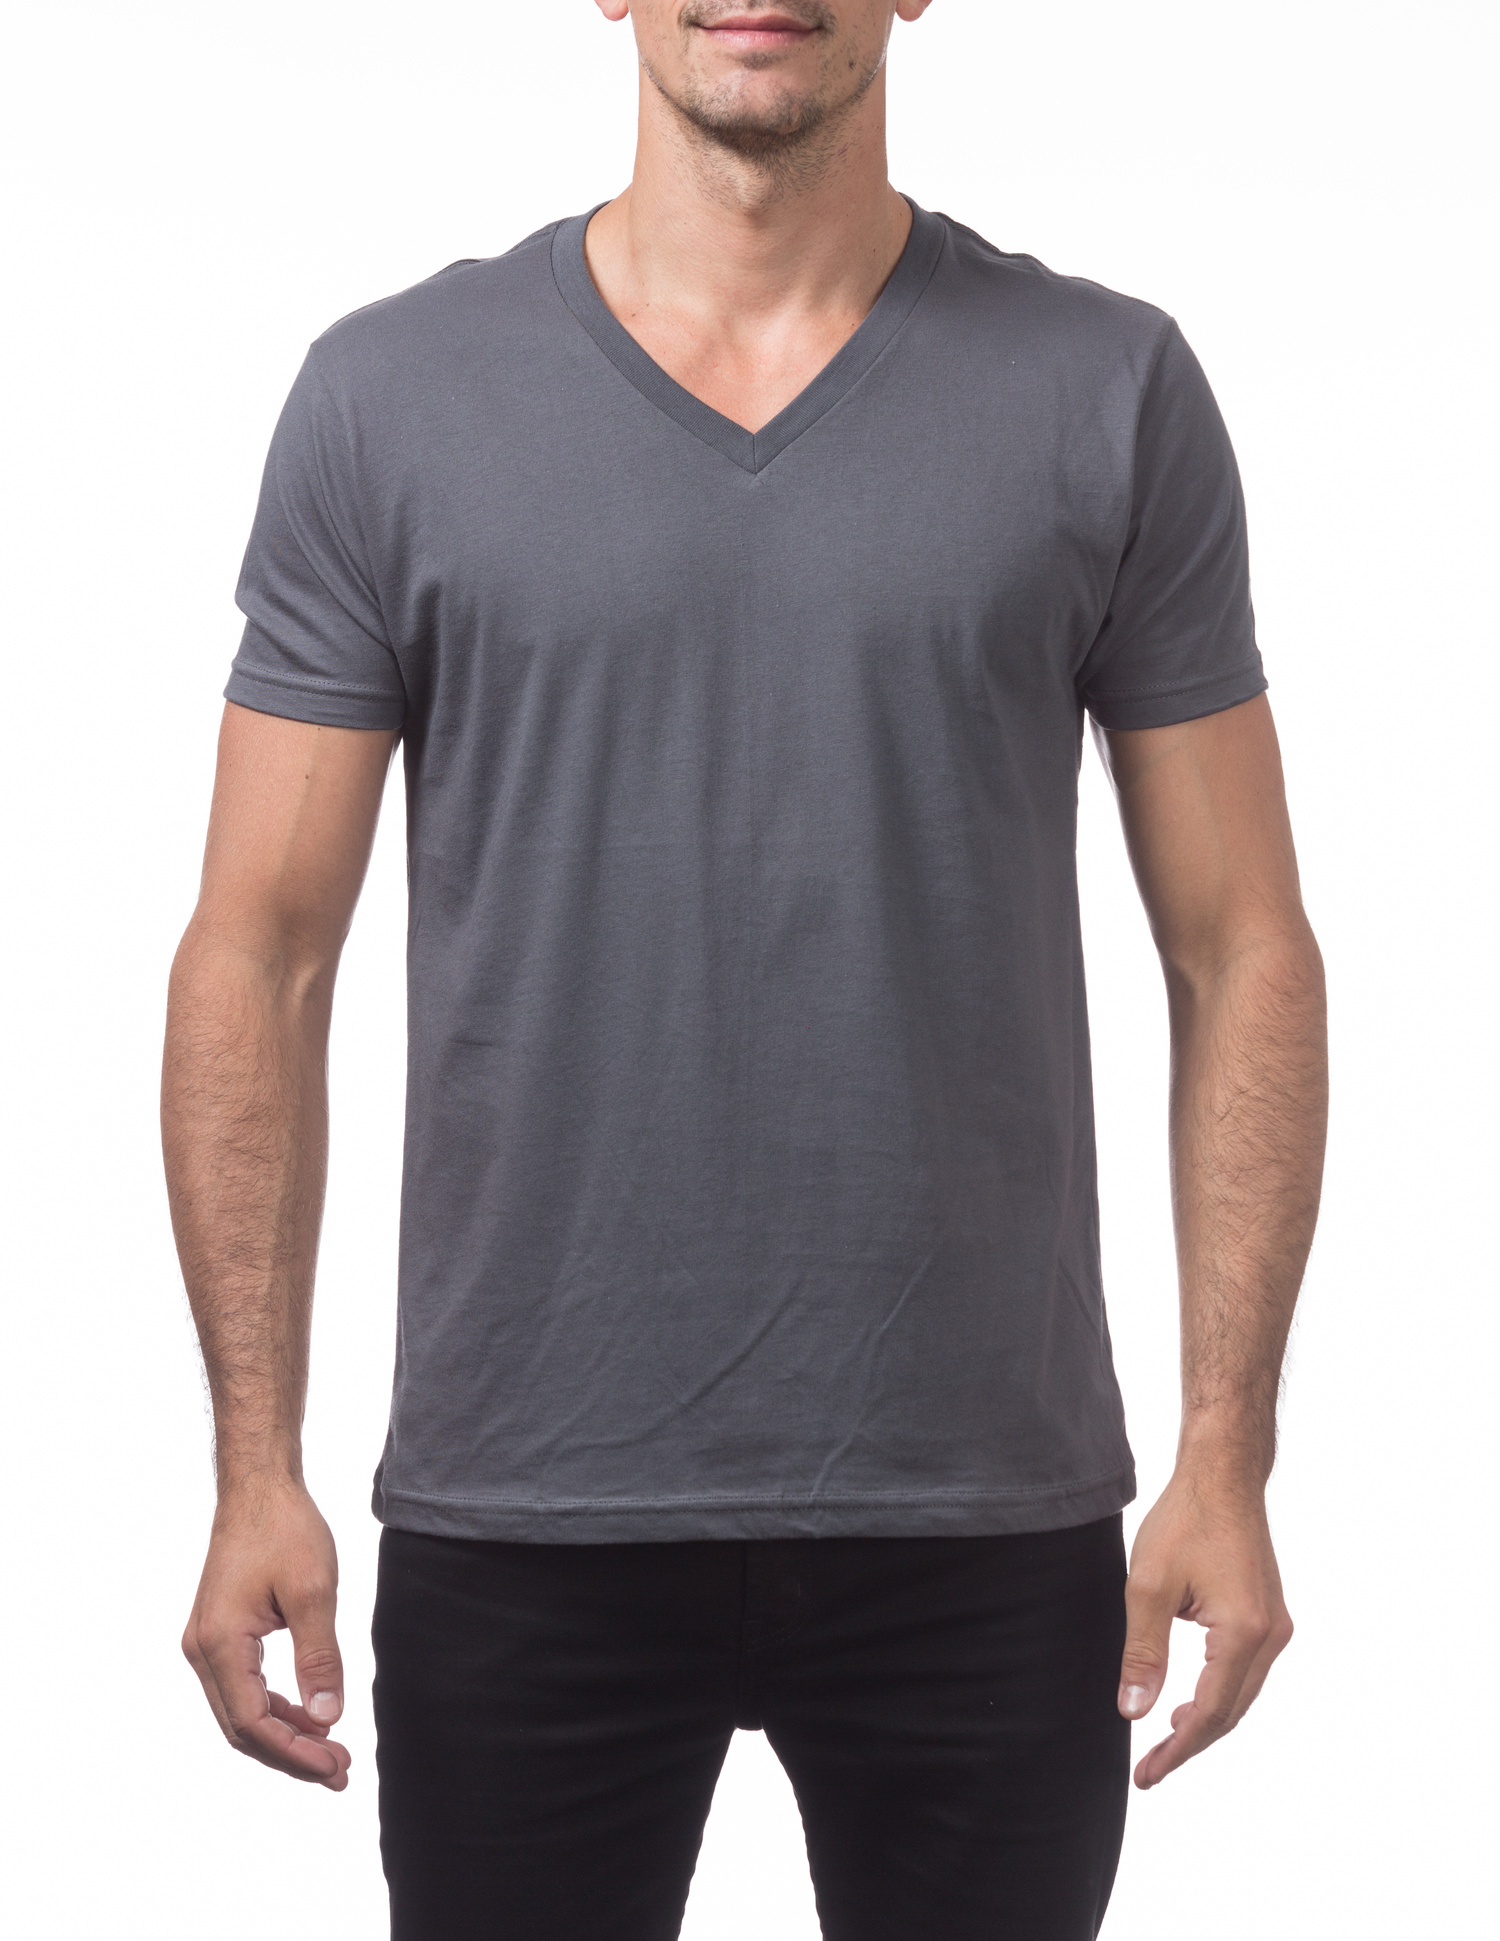 109 GRAPHITE Lightweight Short Sleeve V-Neck T-Shirt